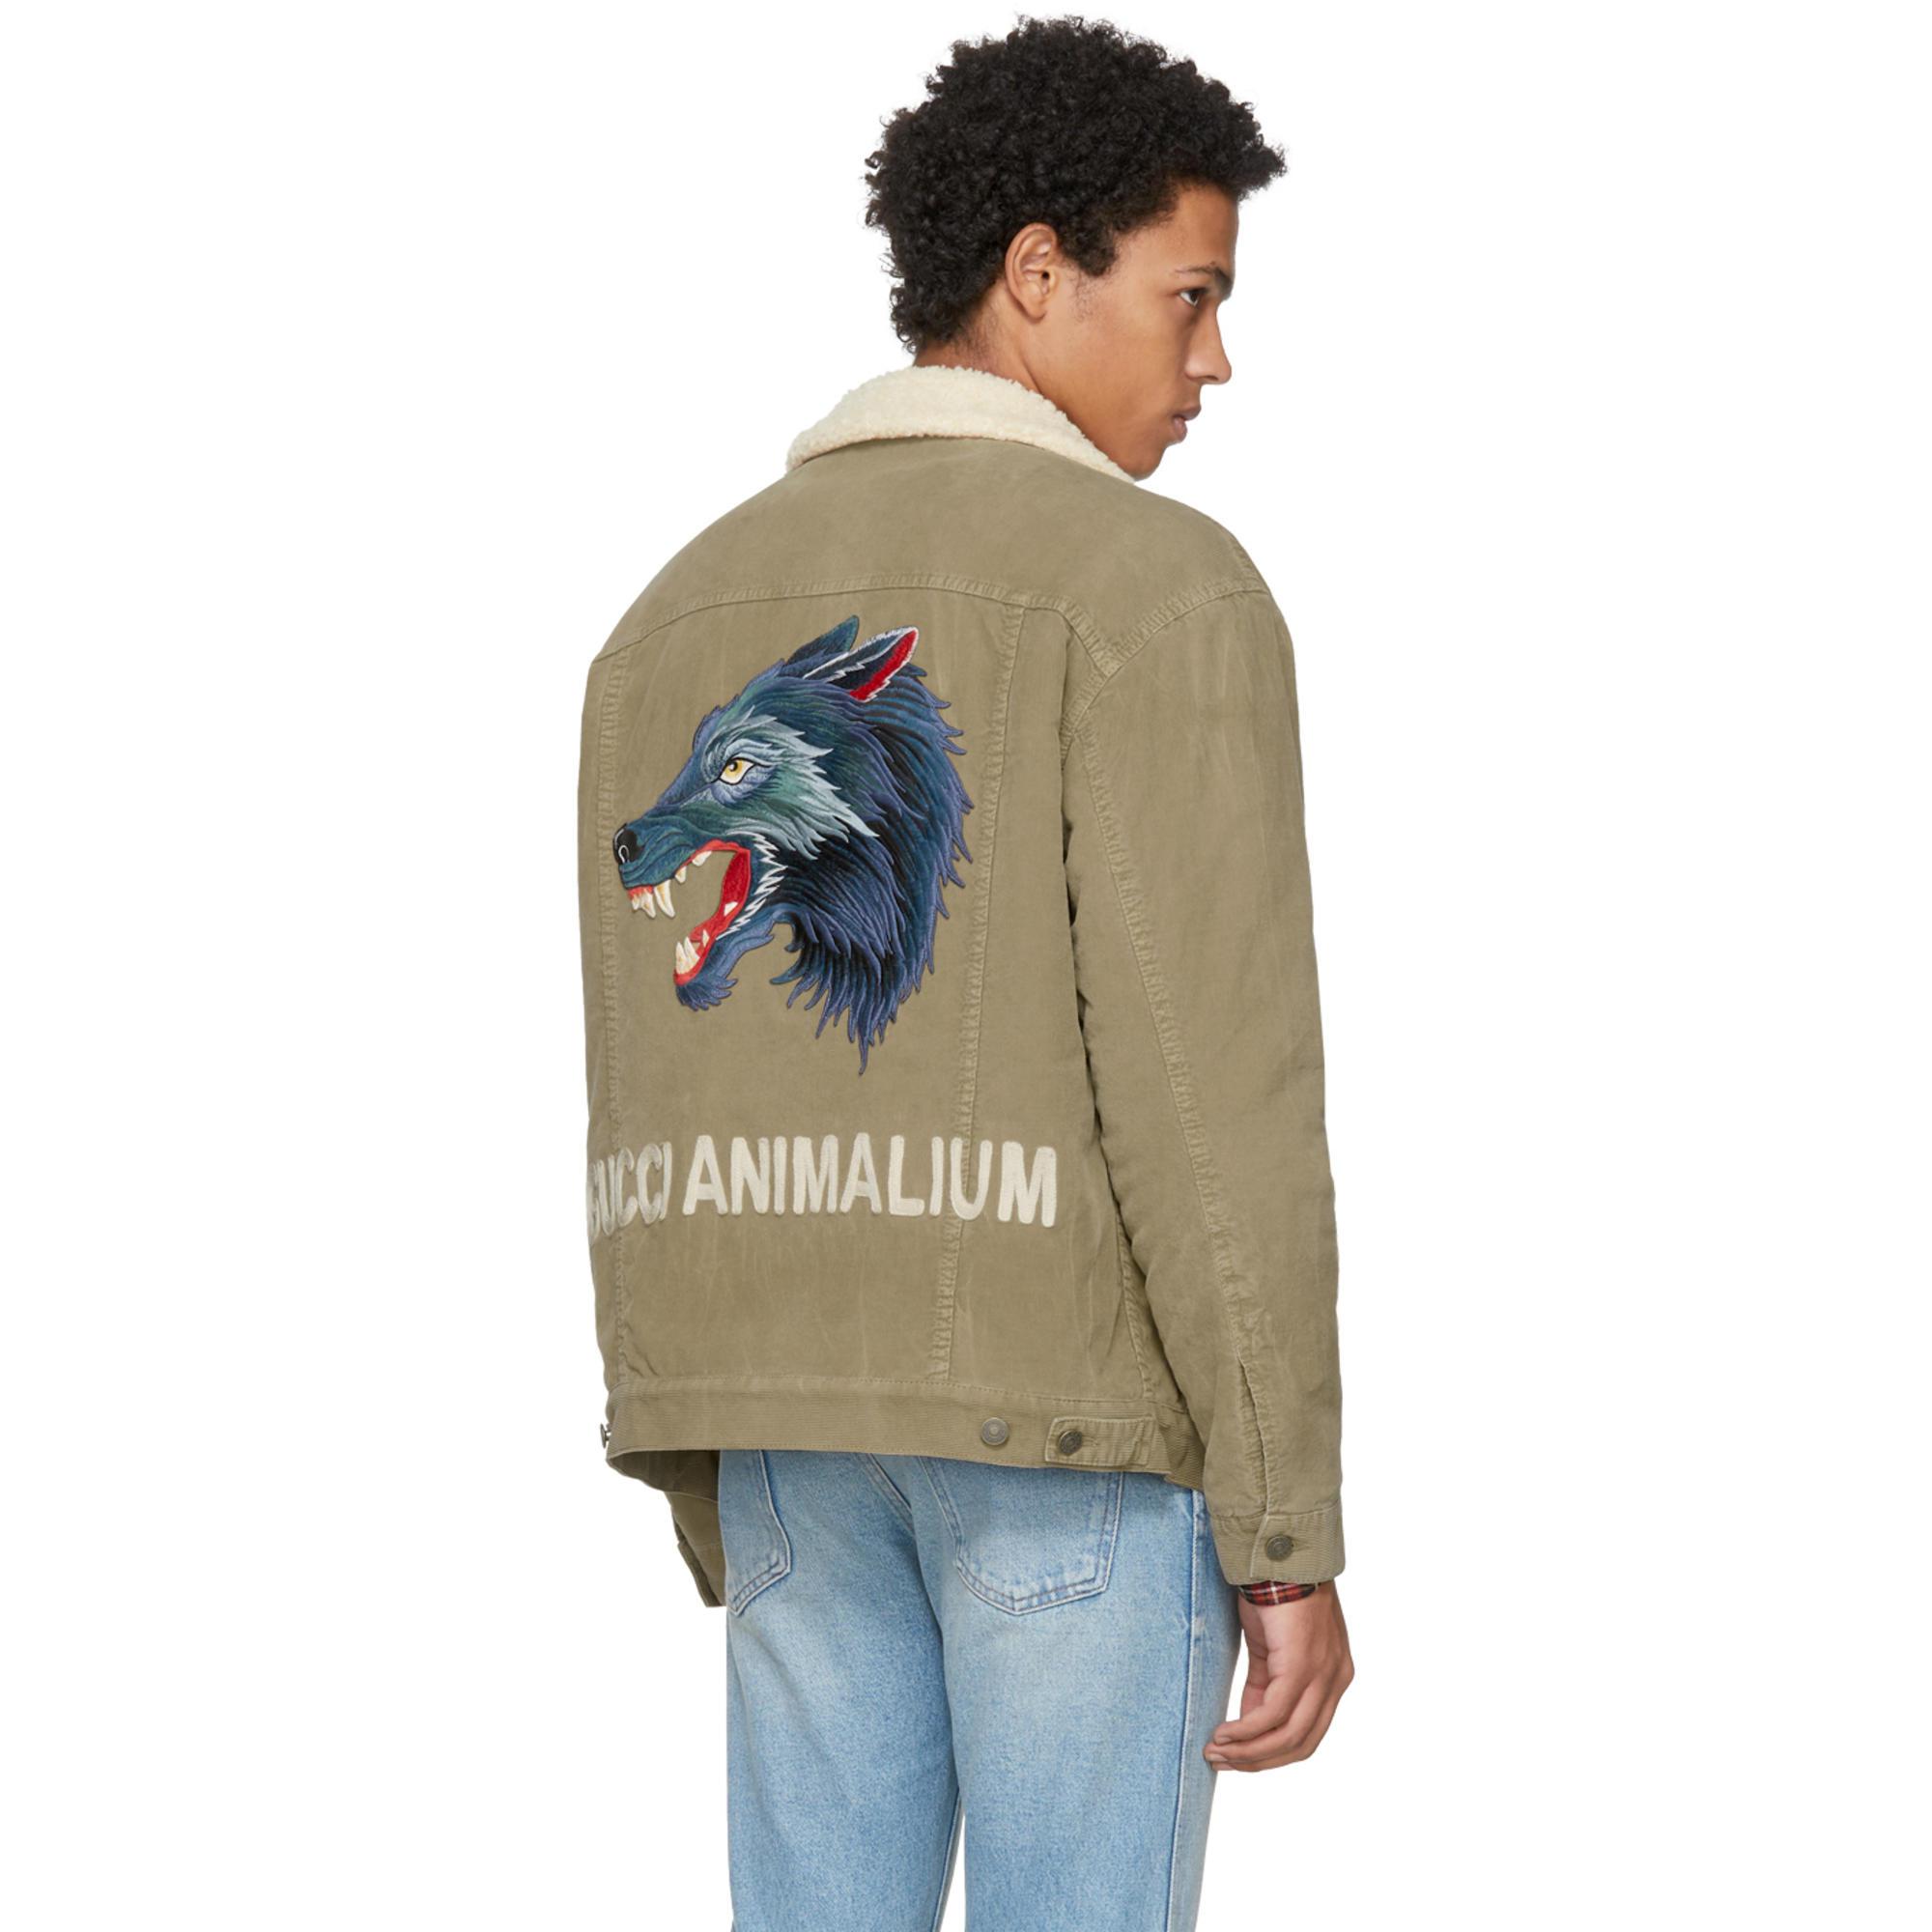 gucci animalium jacket, OFF 73%,www 